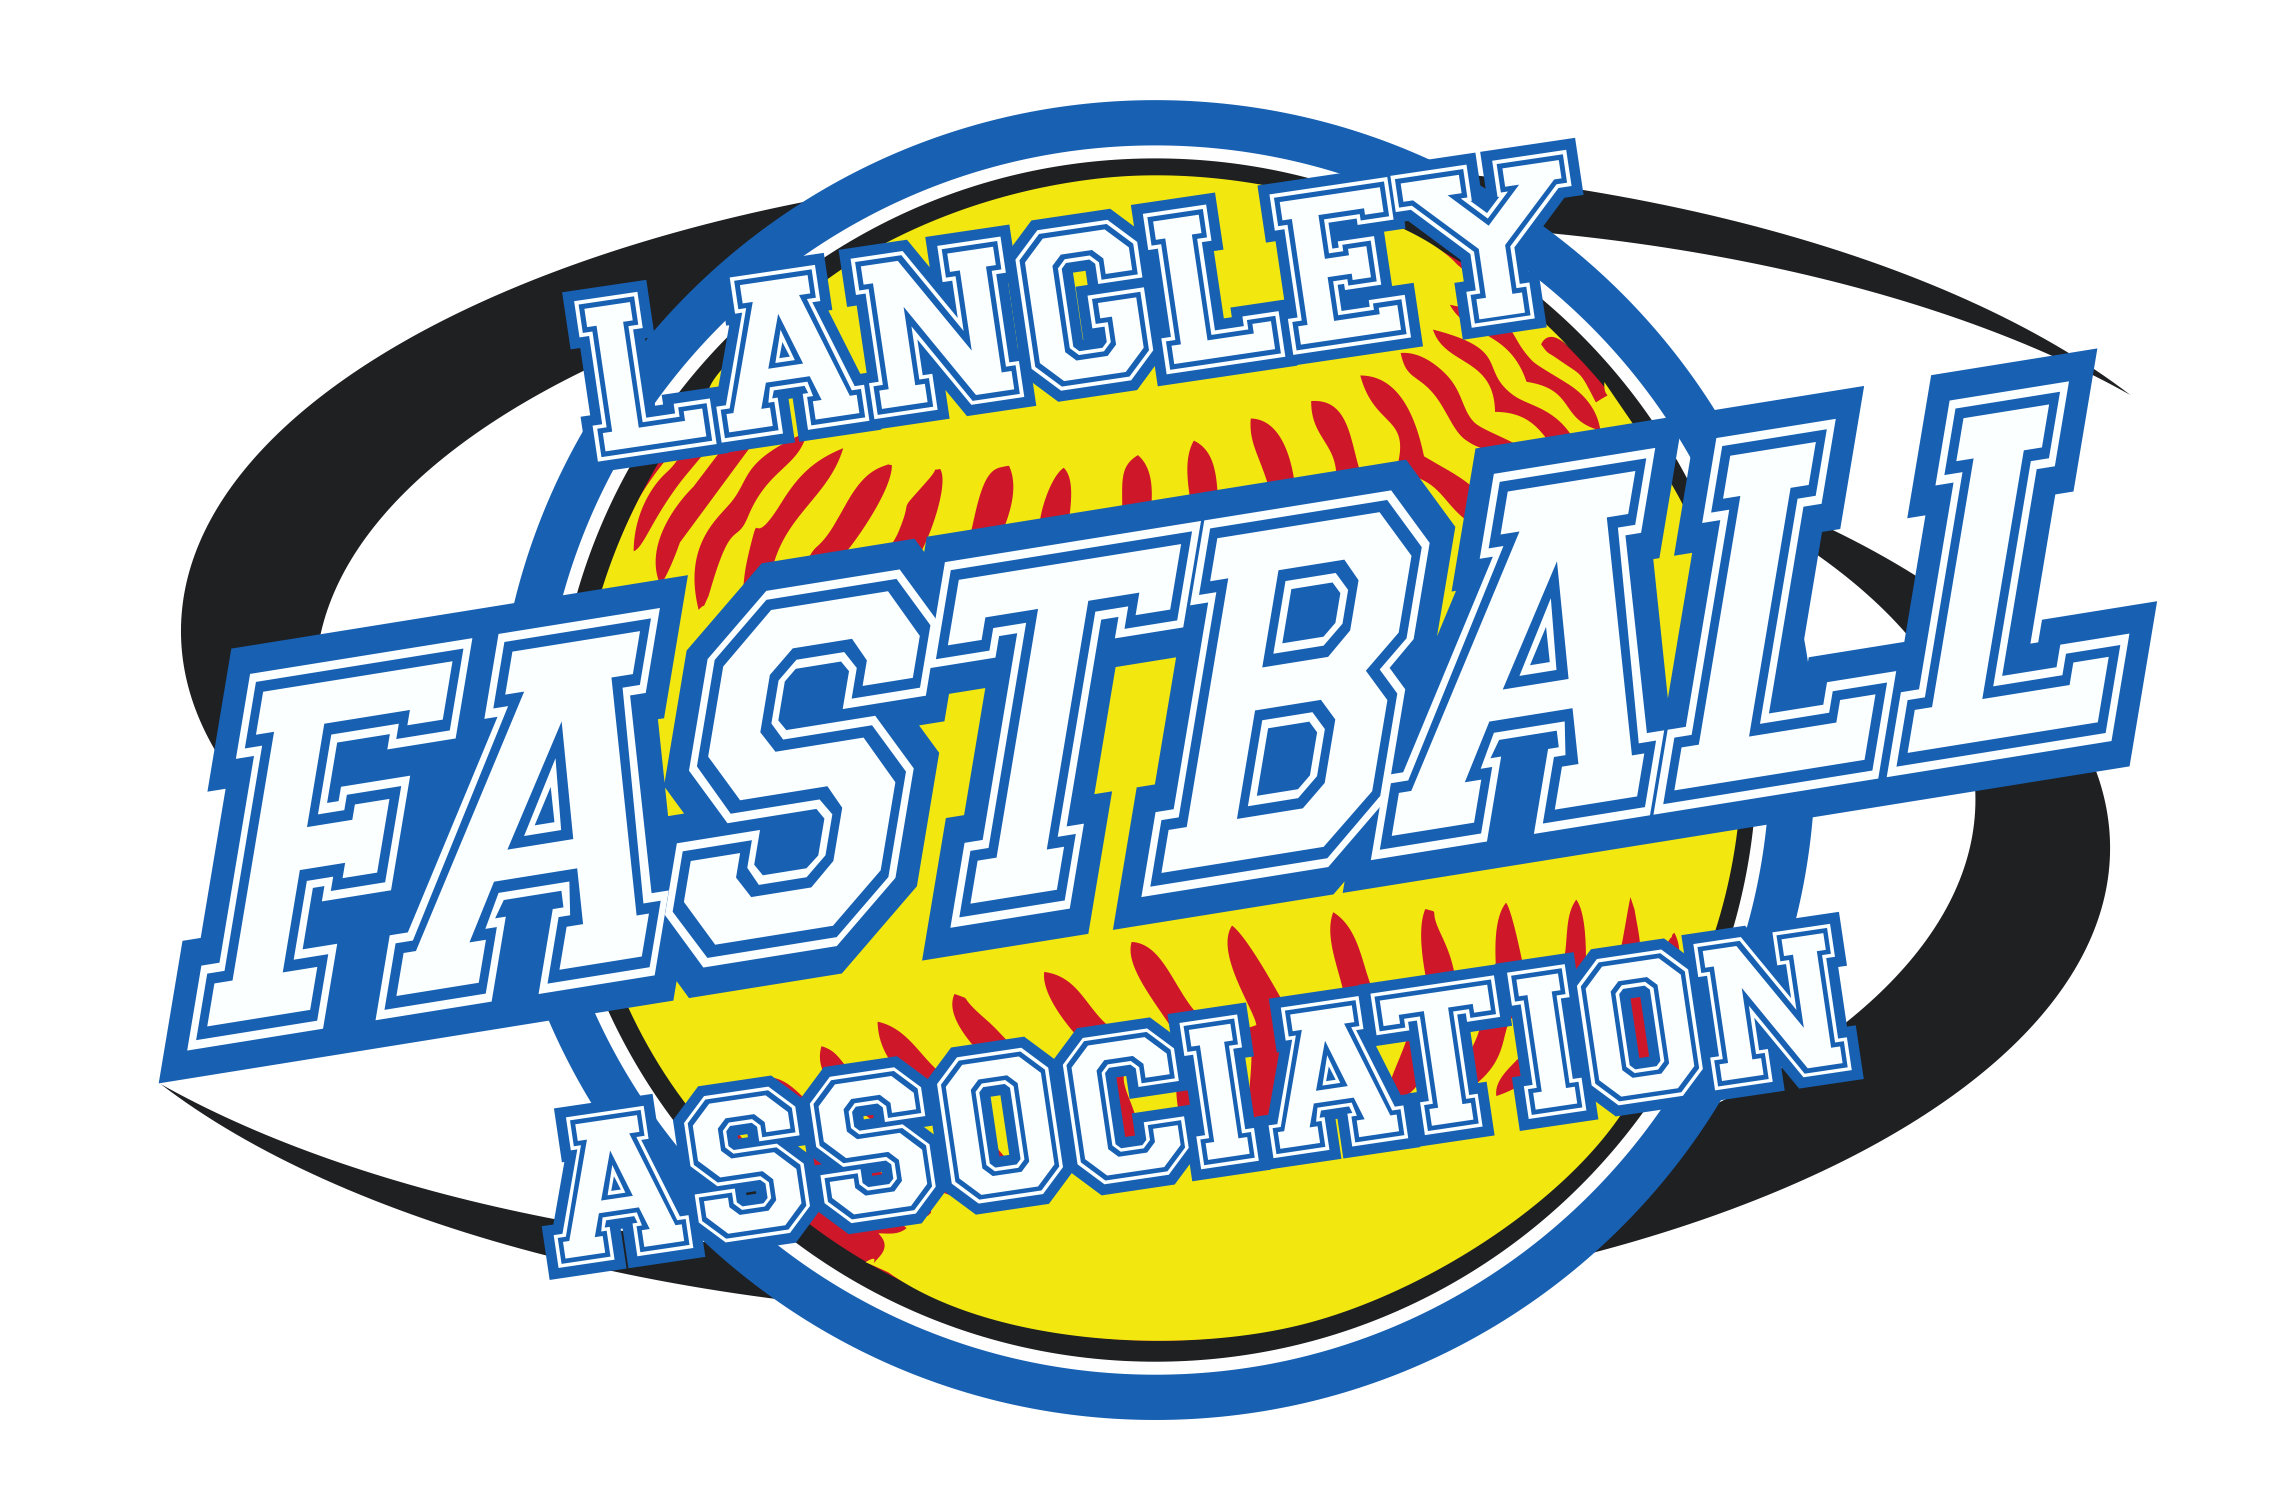 Langley Fastball Association